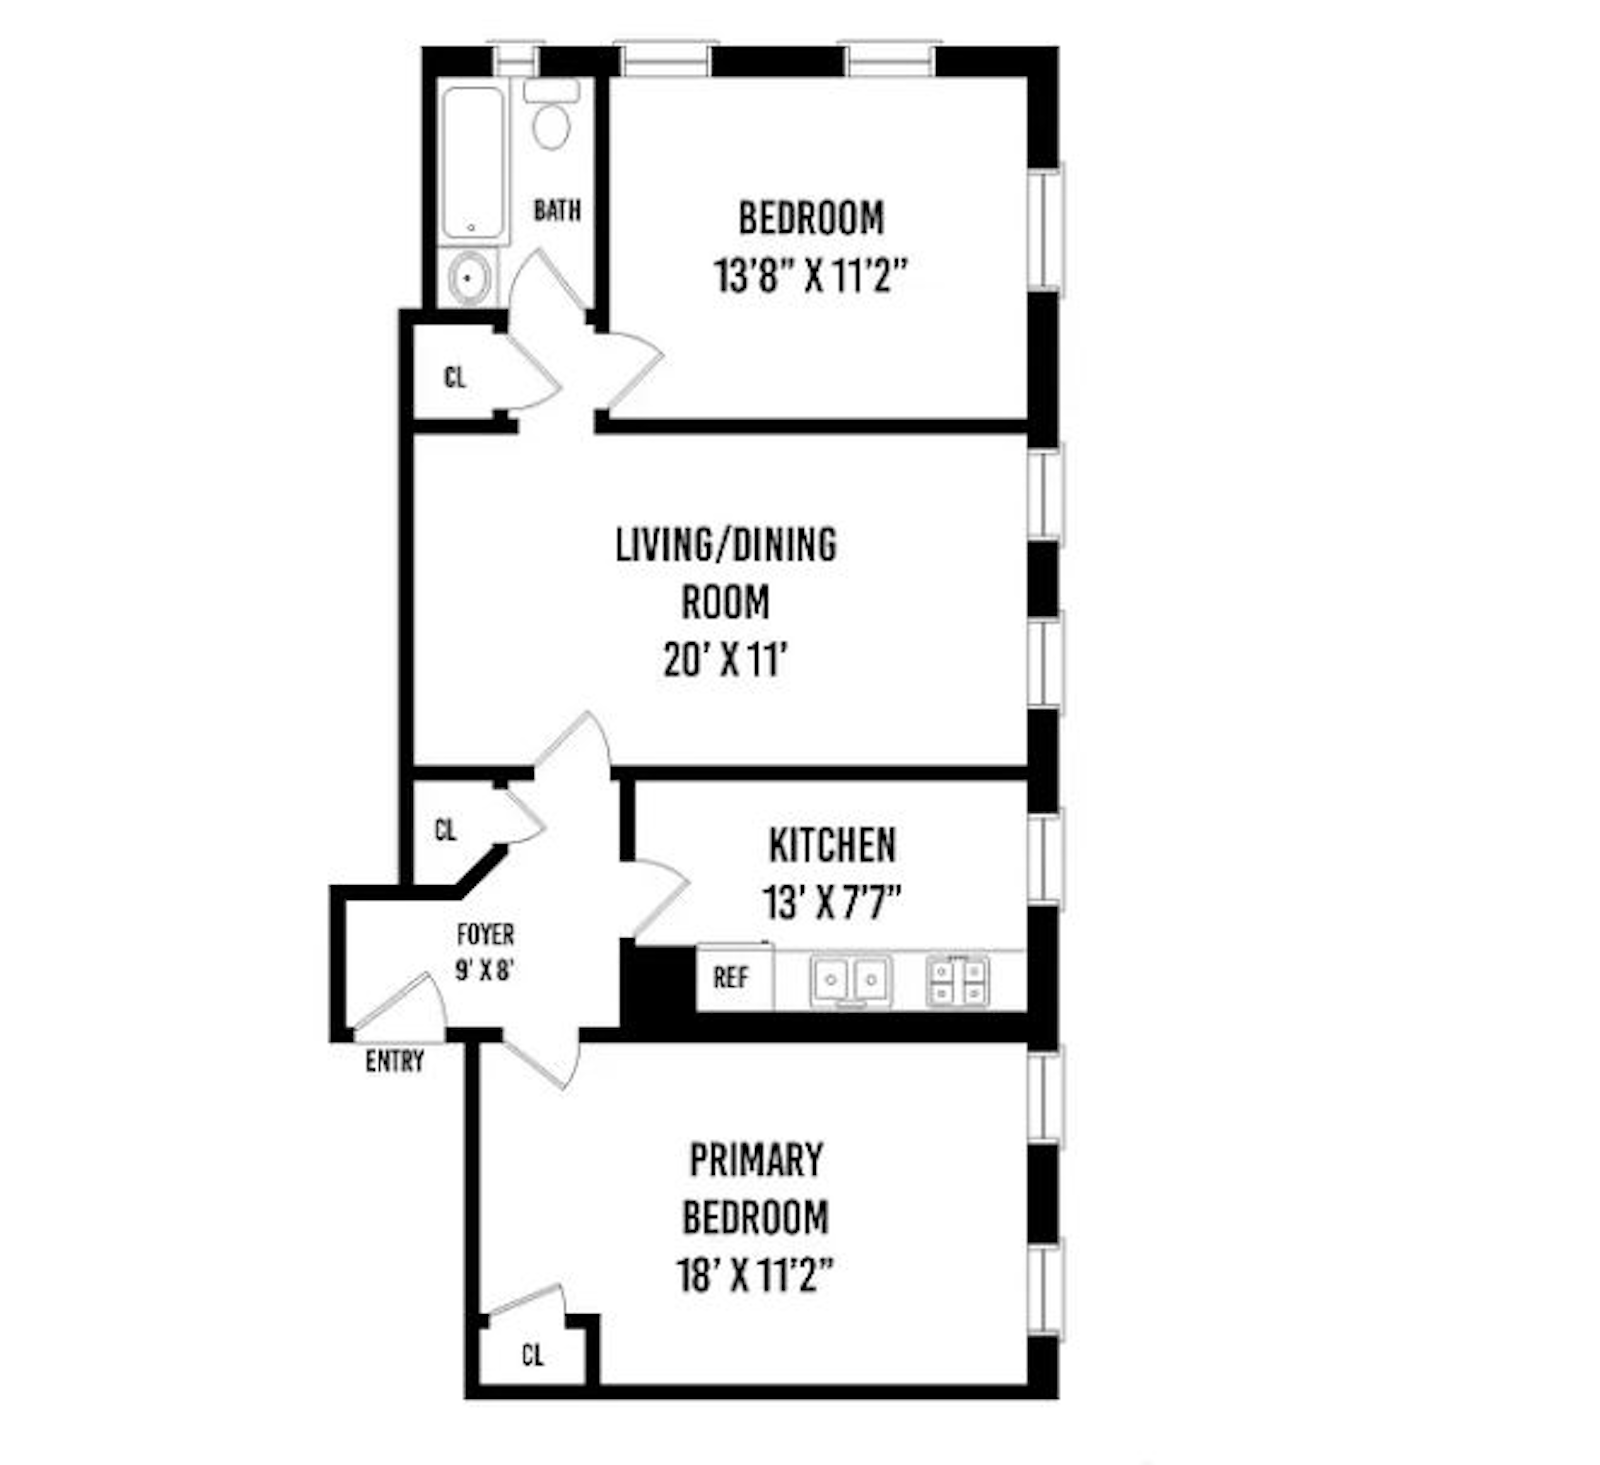 Floorplan for 828 Gerard Avenue